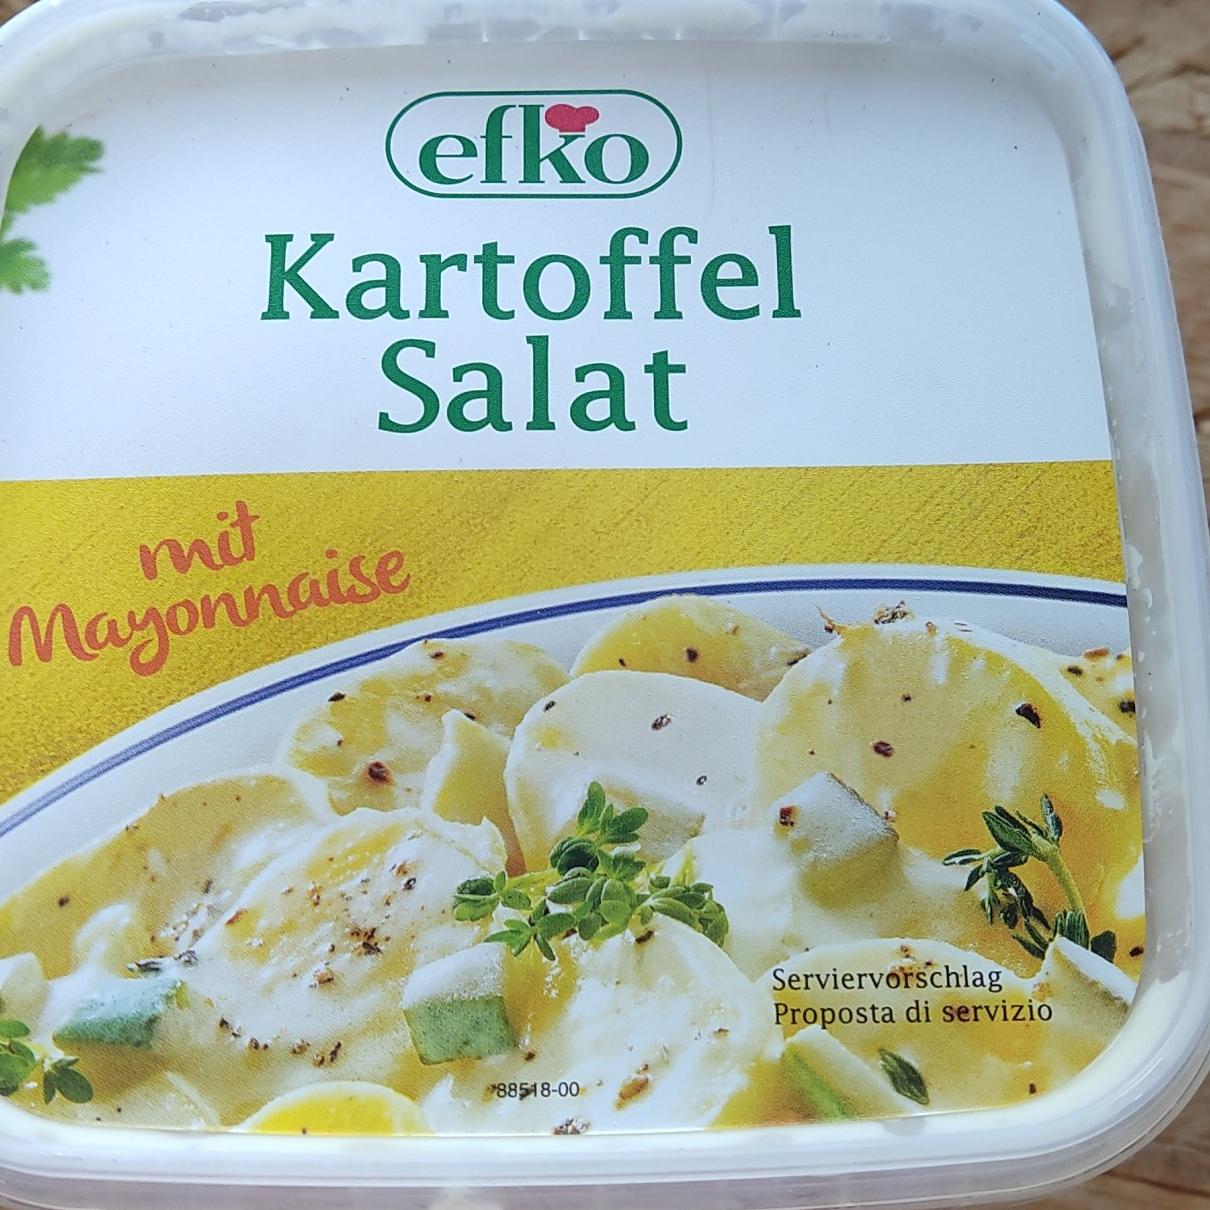 Fotografie - Kartoffel salat mit mayonnaise efko